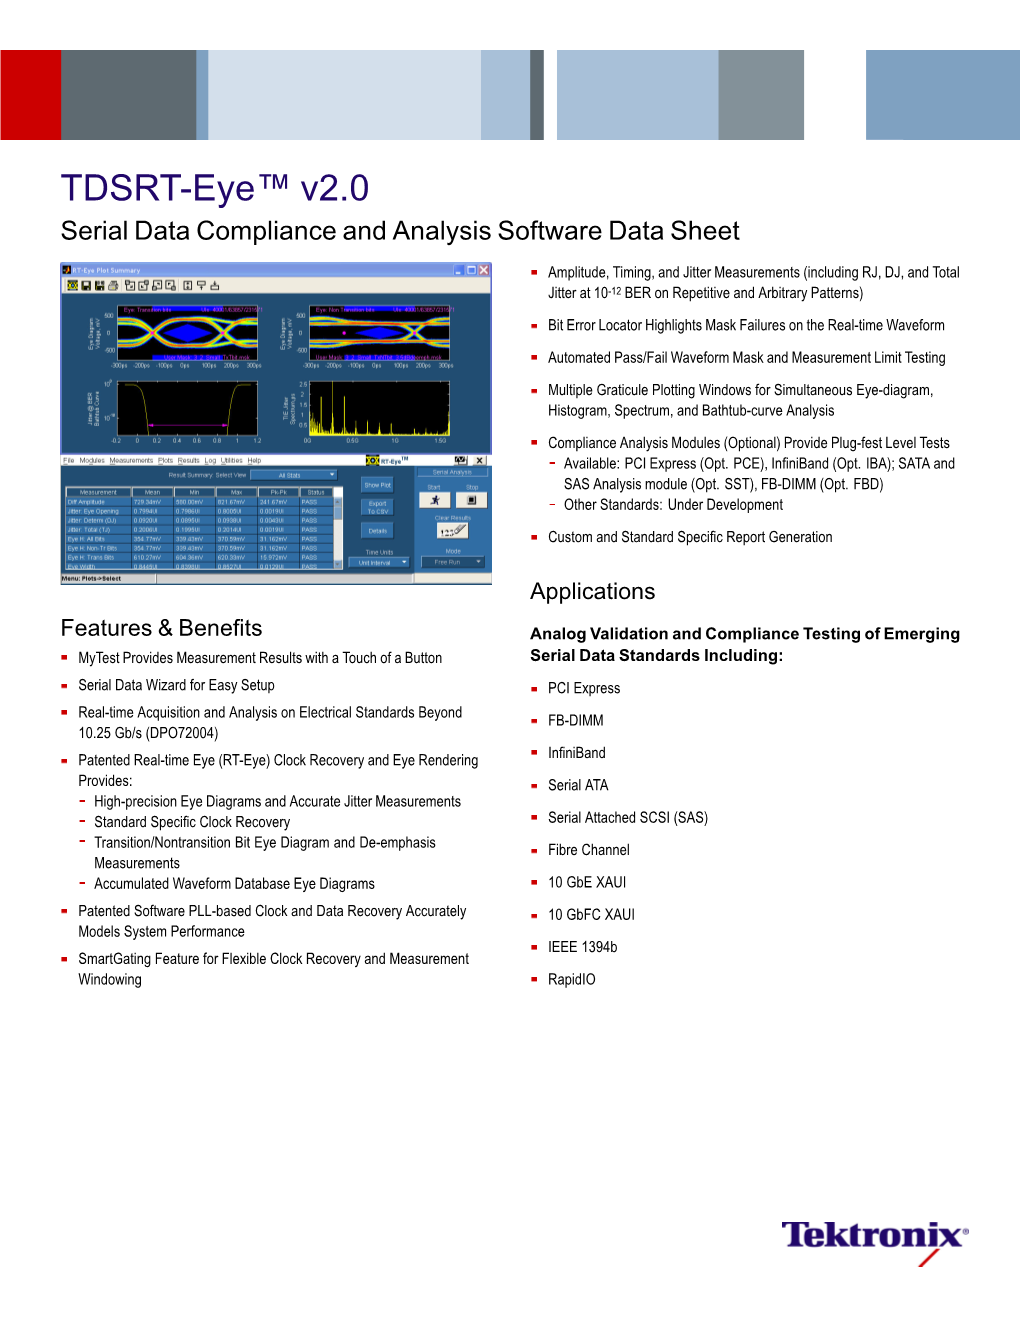 TDSRT-Eye™ V2.0 Serial Data Compliance and Analysis Software Data Sheet